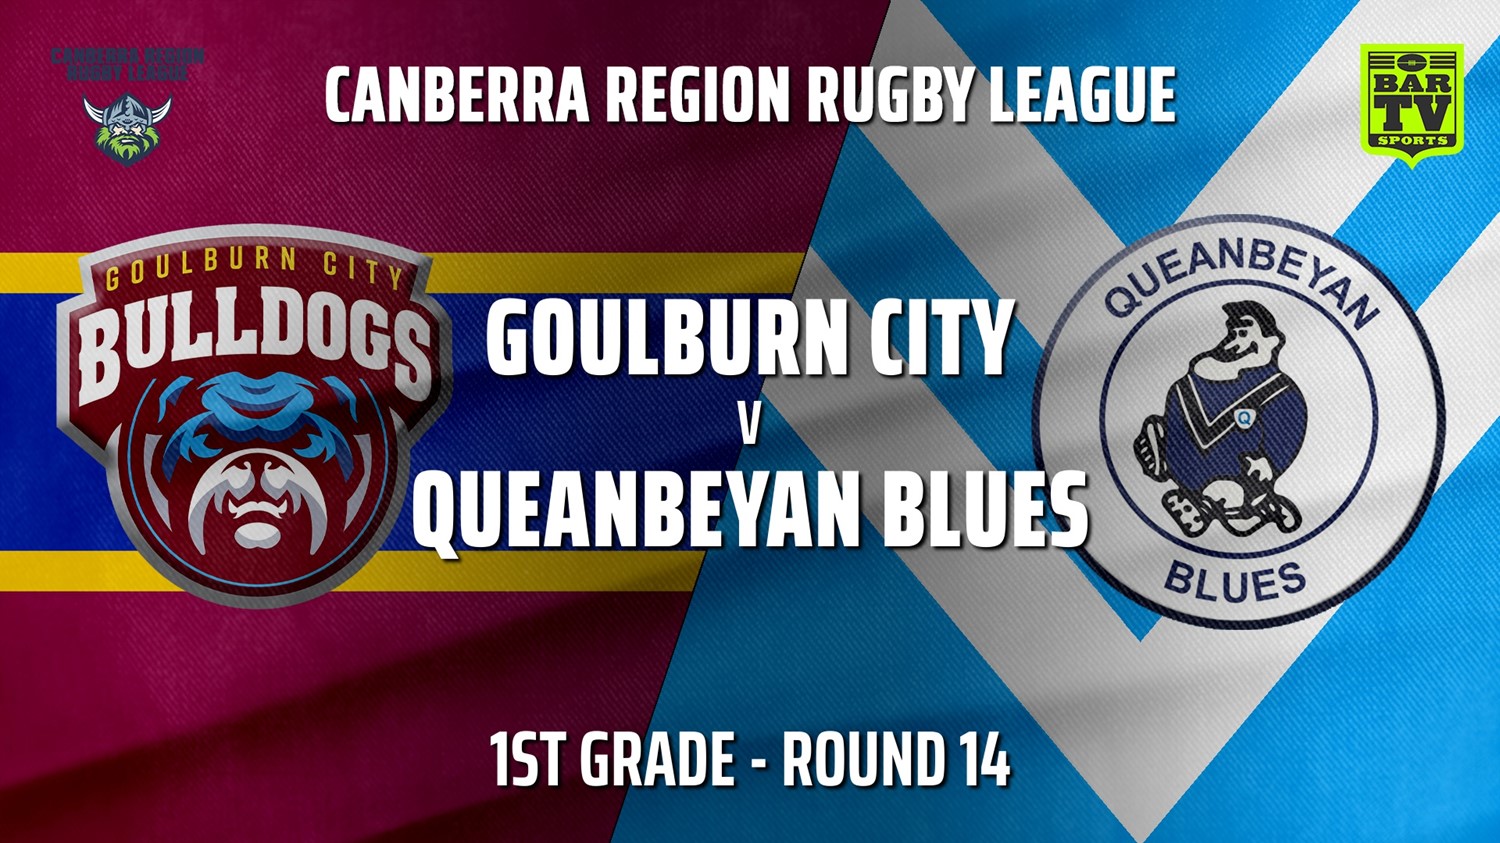 210801-Canberra Round 14 - 1st Grade - Goulburn City Bulldogs v Queanbeyan Blues Slate Image